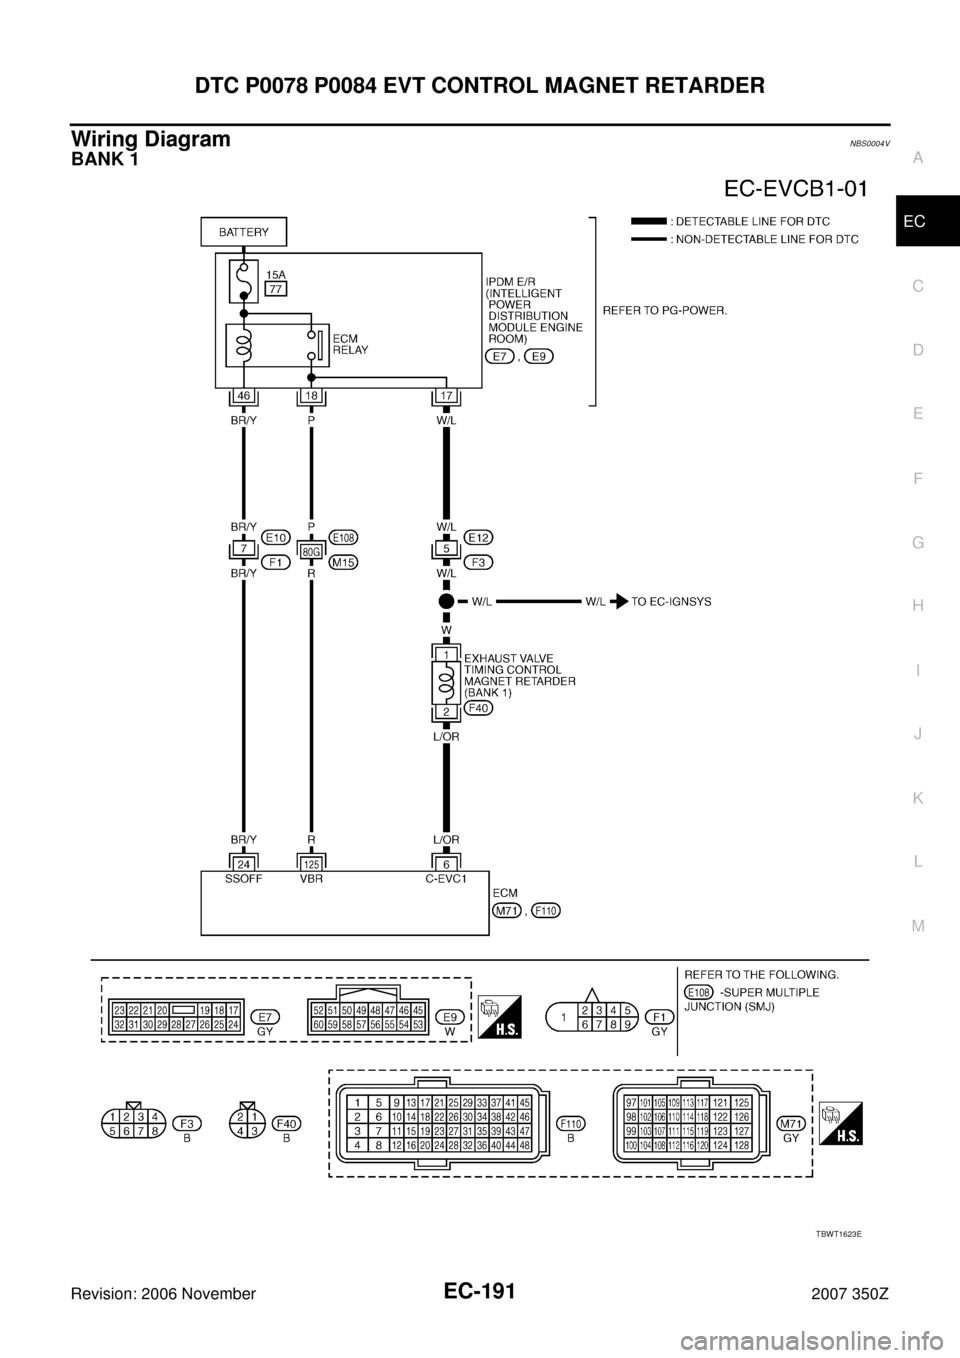 NISSAN 350Z 2007 Z33 Engine Control Service Manual DTC P0078 P0084 EVT CONTROL MAGNET RETARDER
EC-191
C
D
E
F
G
H
I
J
K
L
MA
EC
Revision: 2006 November2007 350Z
Wiring DiagramNBS0004V
BANK 1
TBWT1623E 